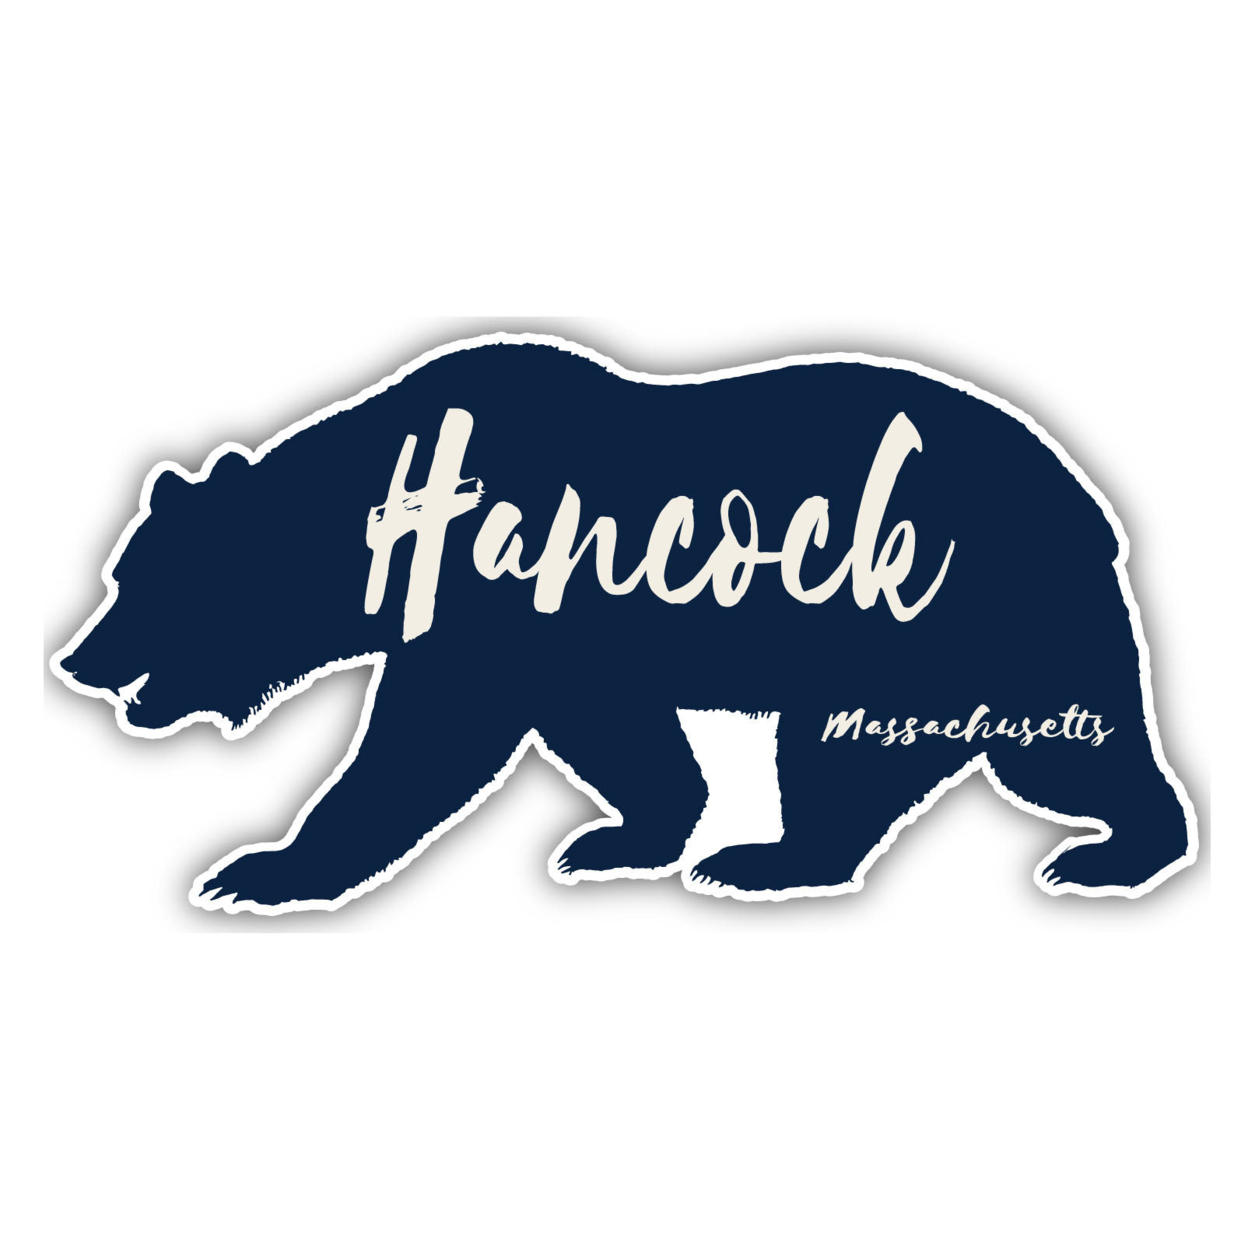 Hancock Massachusetts Souvenir Decorative Stickers (Choose Theme And Size) - 4-Pack, 4-Inch, Bear